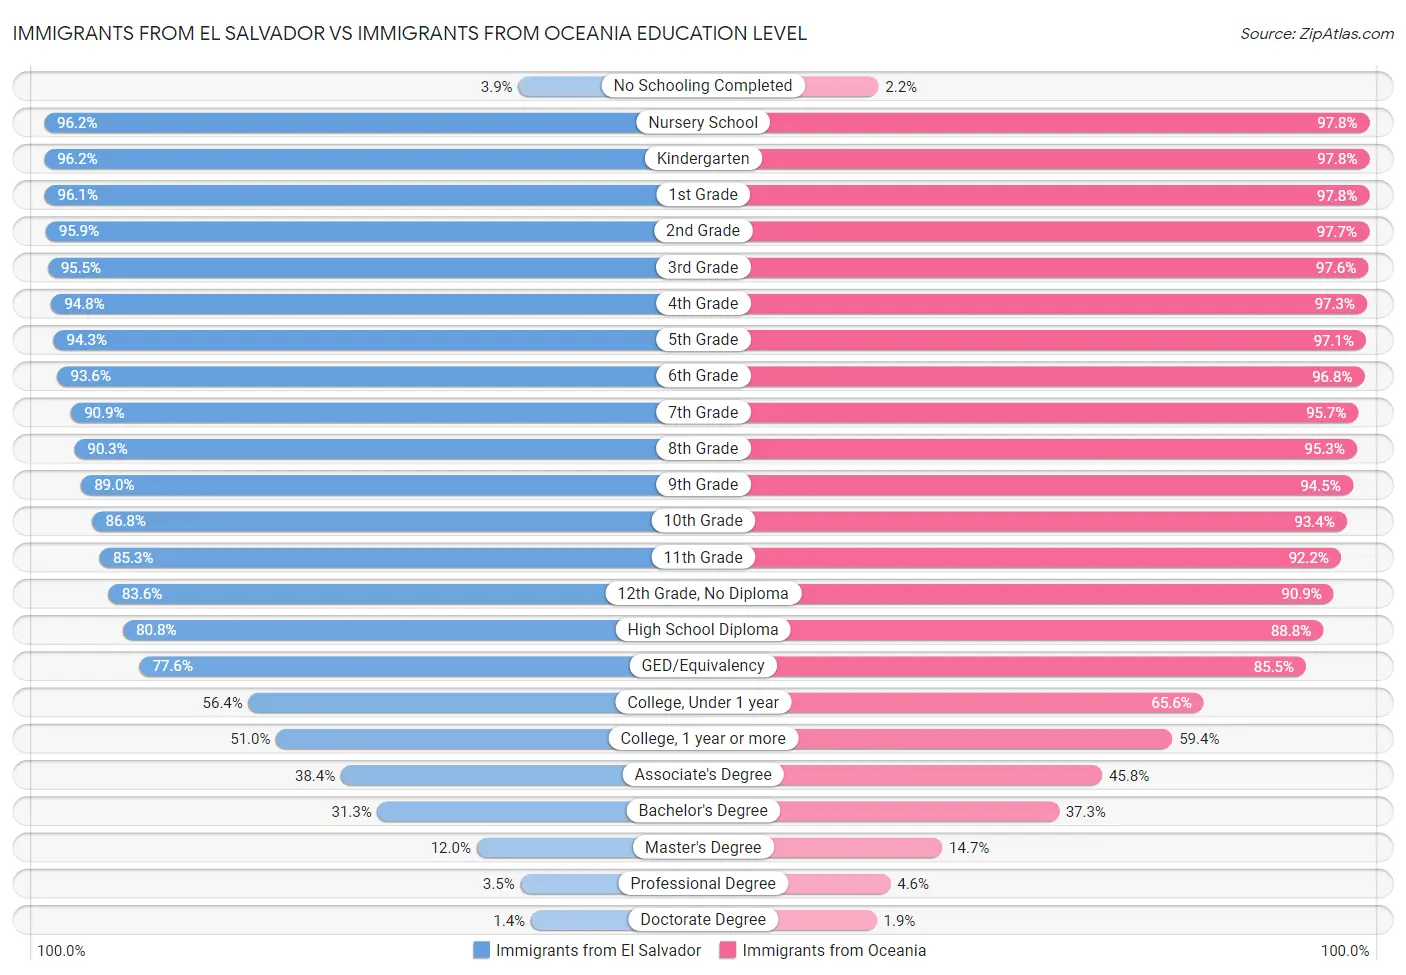 Immigrants from El Salvador vs Immigrants from Oceania Education Level